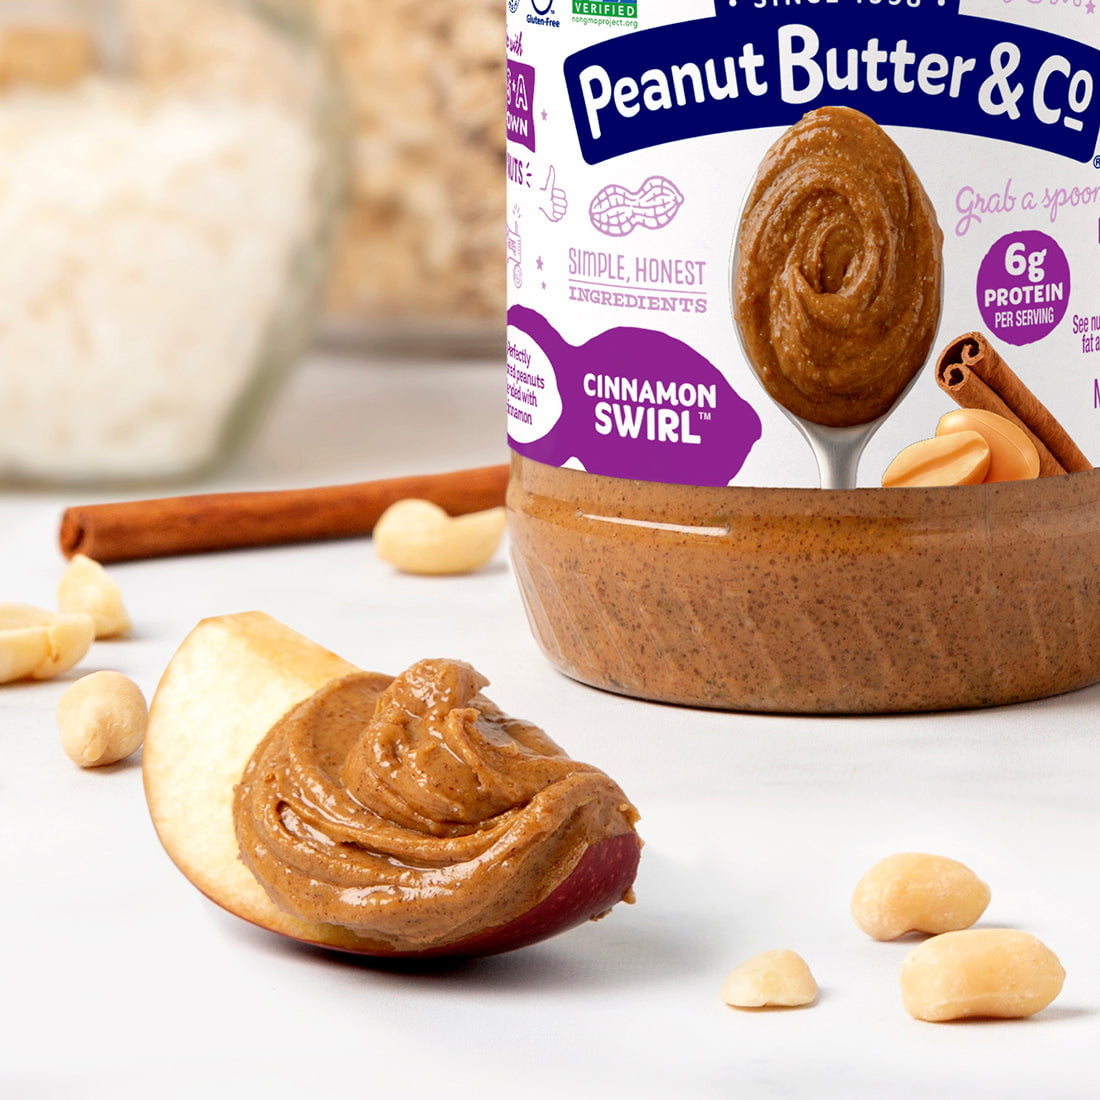 Peanut Butter & Co. Dark Chocolatey Dreams Peanut Butter, Non-GMO Project  Verified, Gluten Free, Vegan, 16 Ounce (Pack of 6)